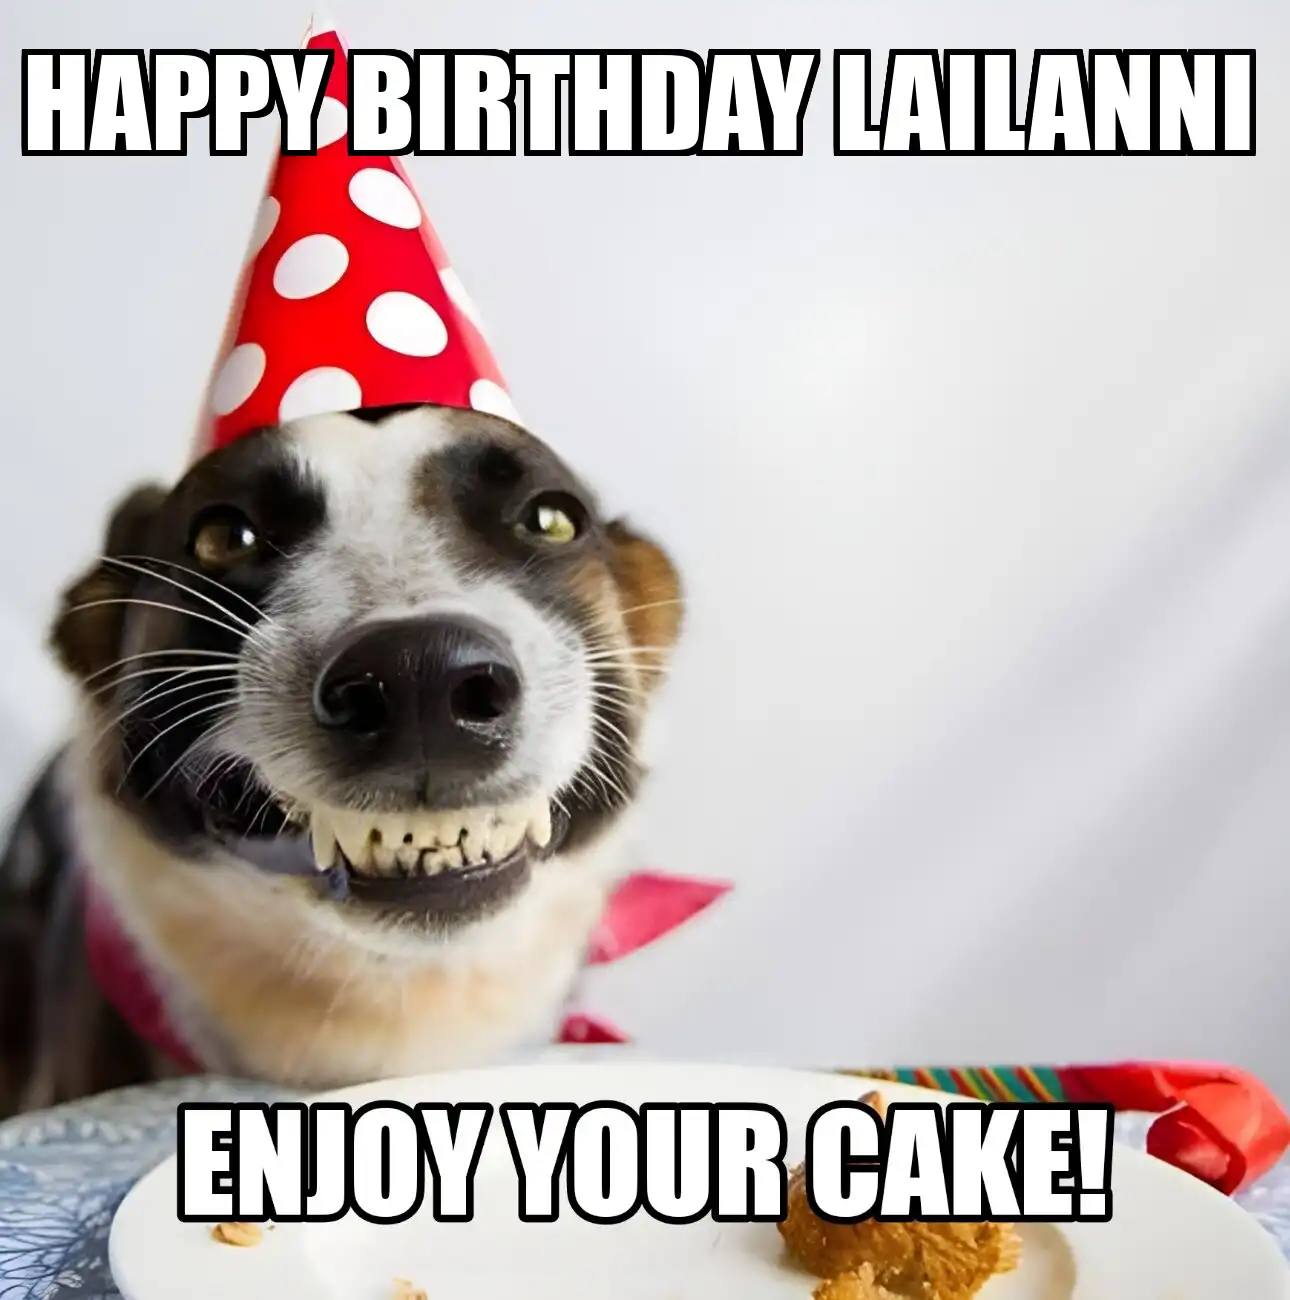 Happy Birthday Lailanni Enjoy Your Cake Dog Meme